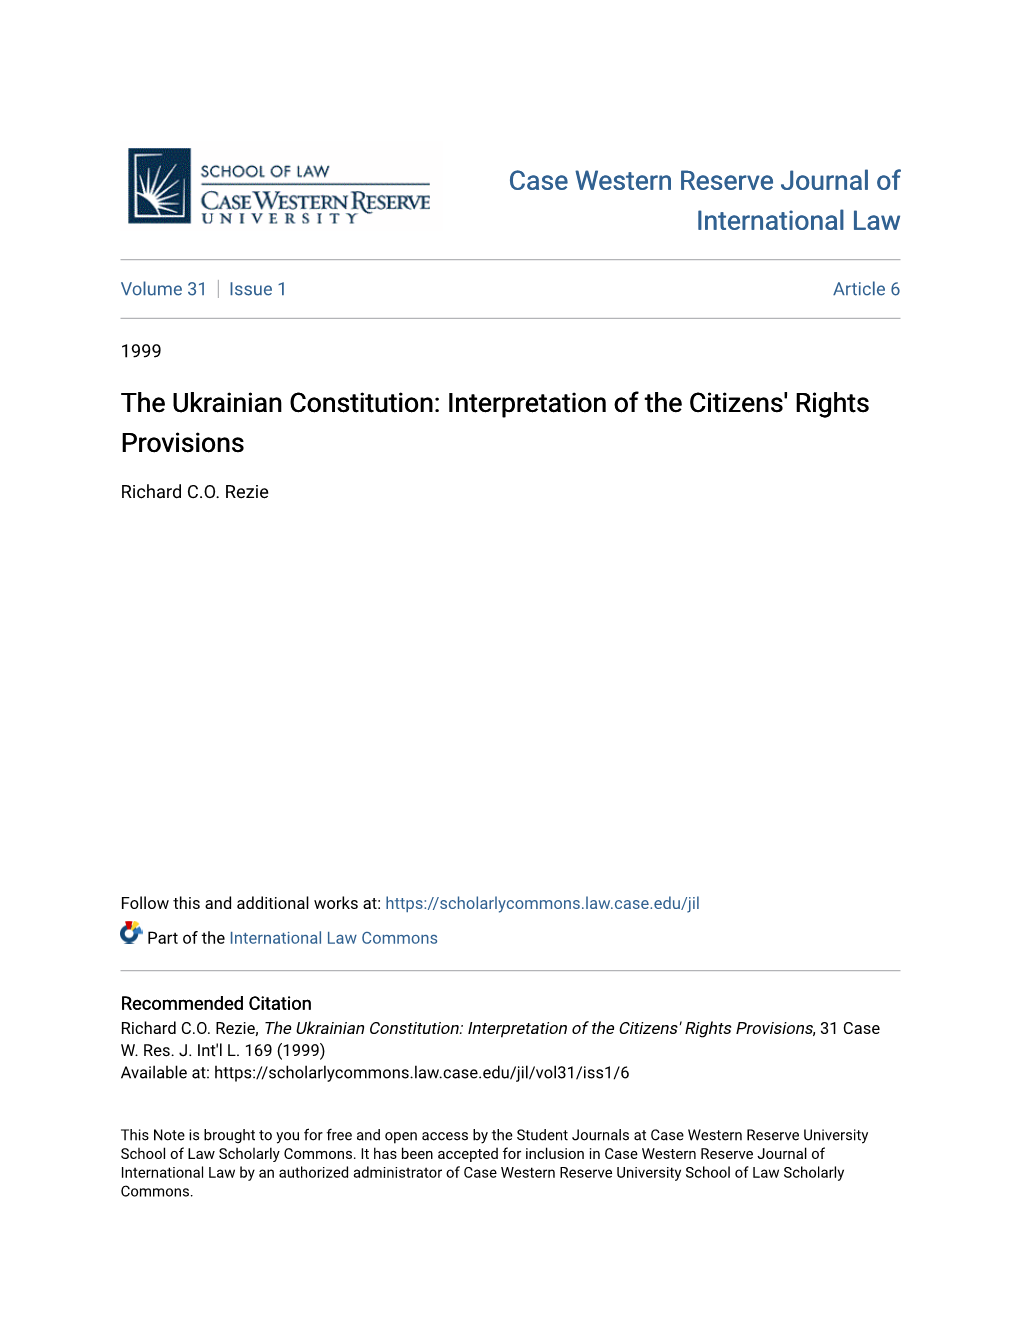 The Ukrainian Constitution: Interpretation of the Citizens' Rights Provisions